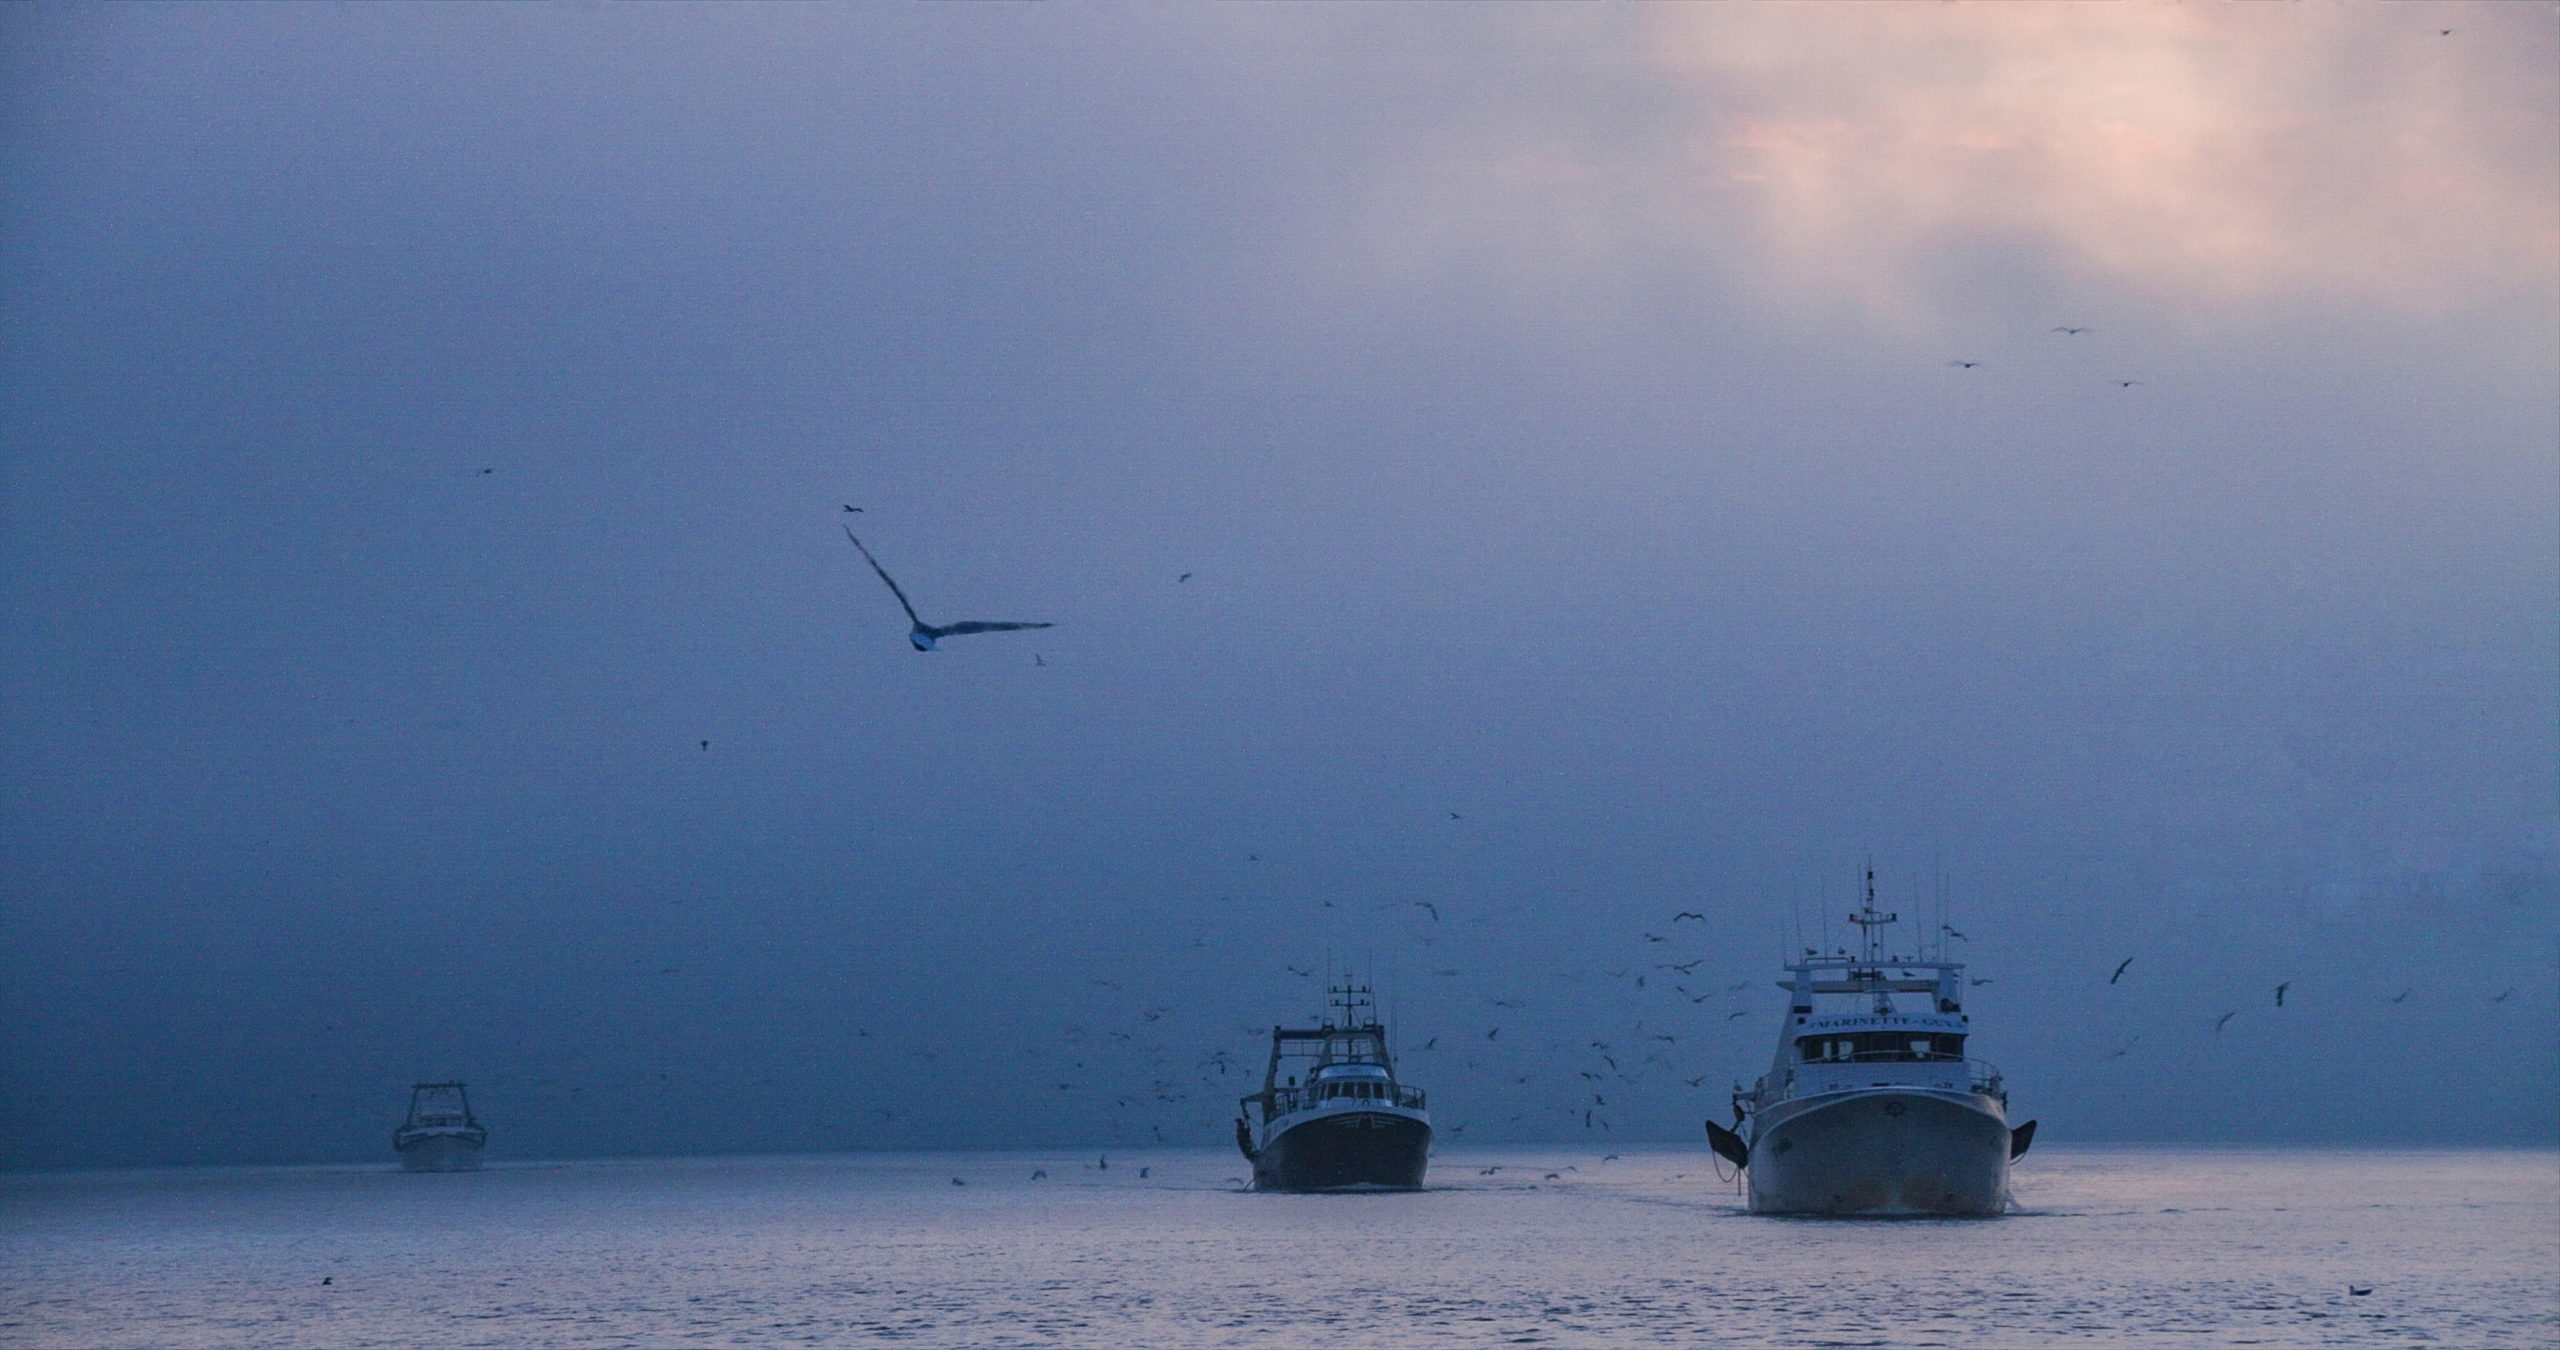 Trawlers in mist